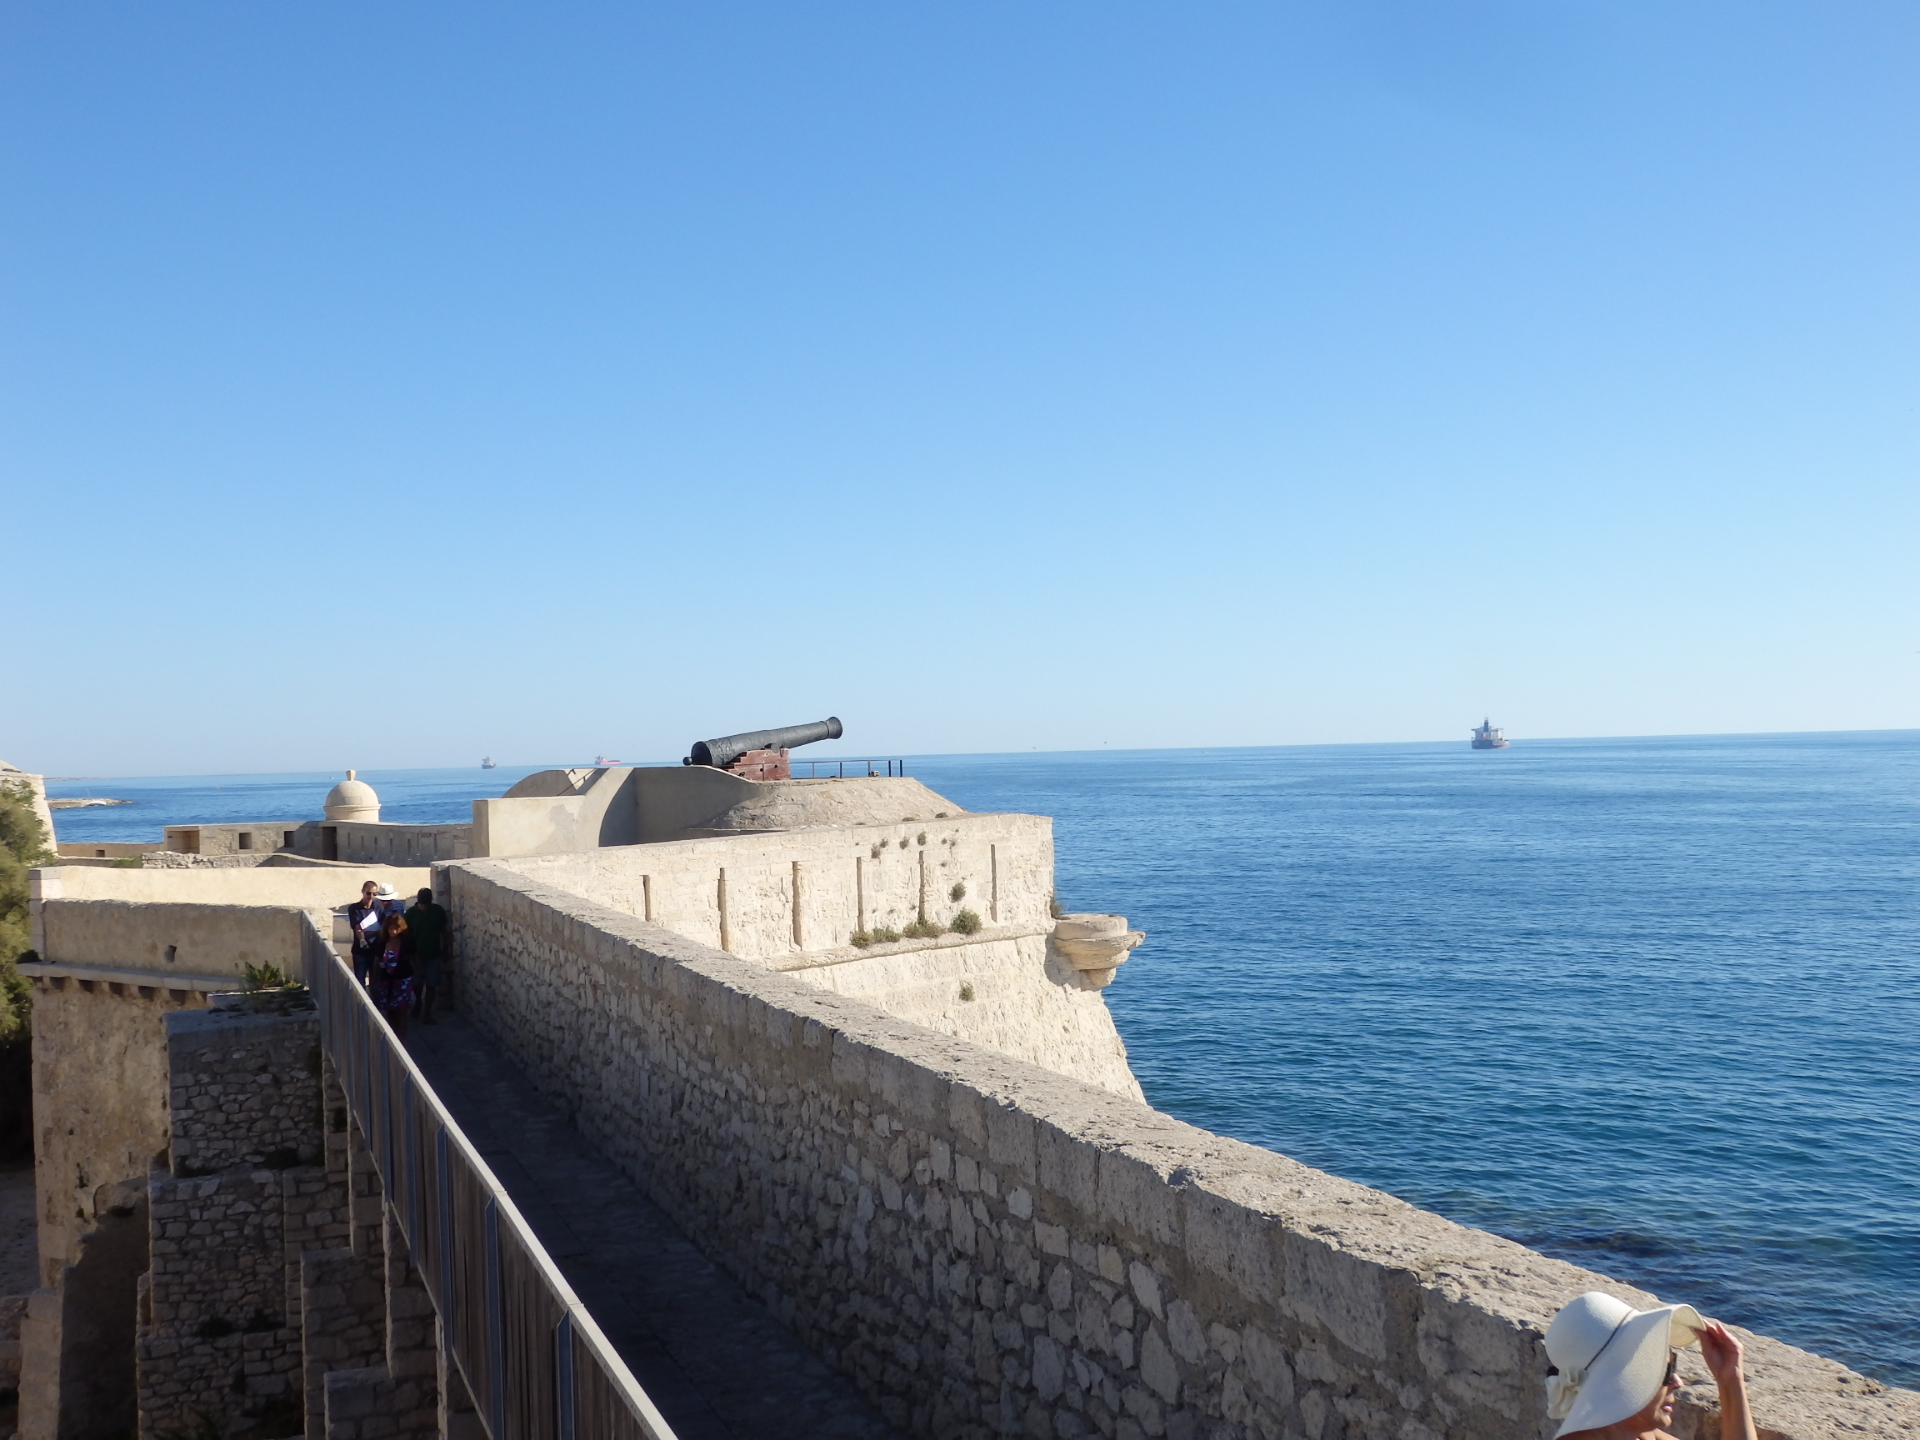 View from the Fort de Bouc - © Otmartigues / KarimK